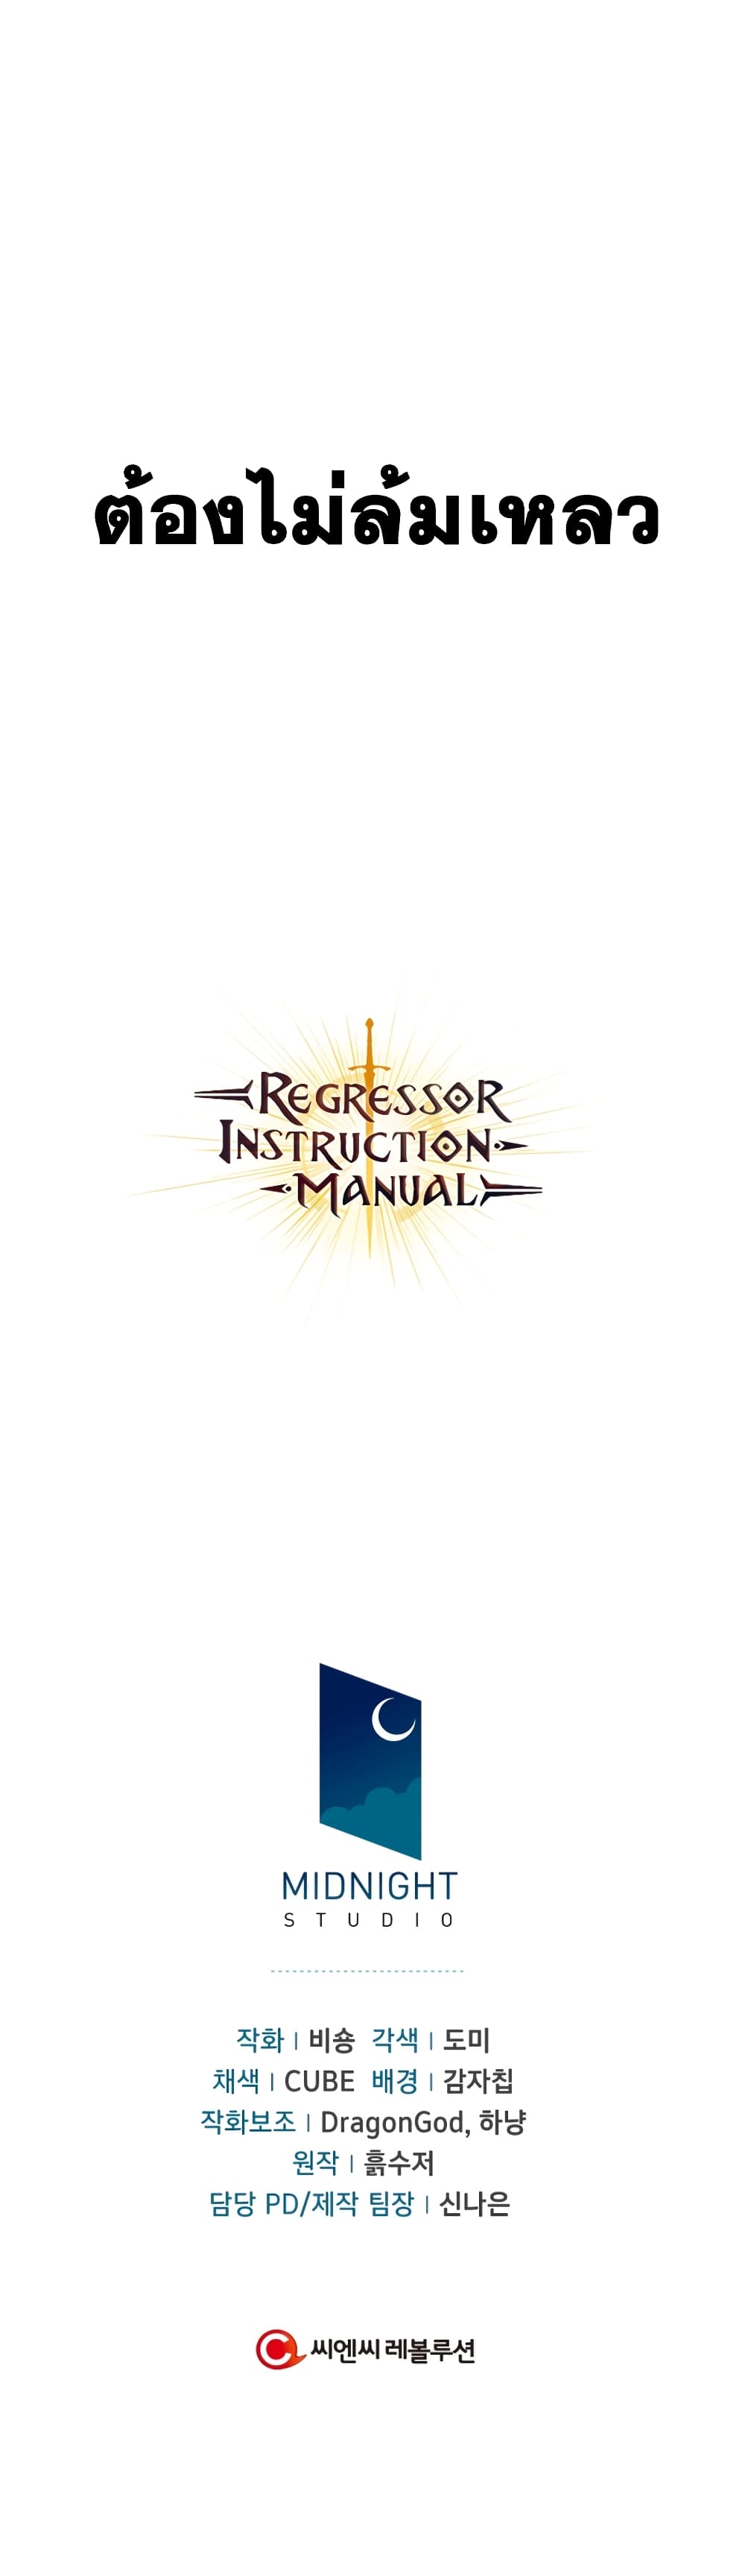 Regressor Instruction Manual คู่มือใช้งานผู้ย้อนกลับ 29-29